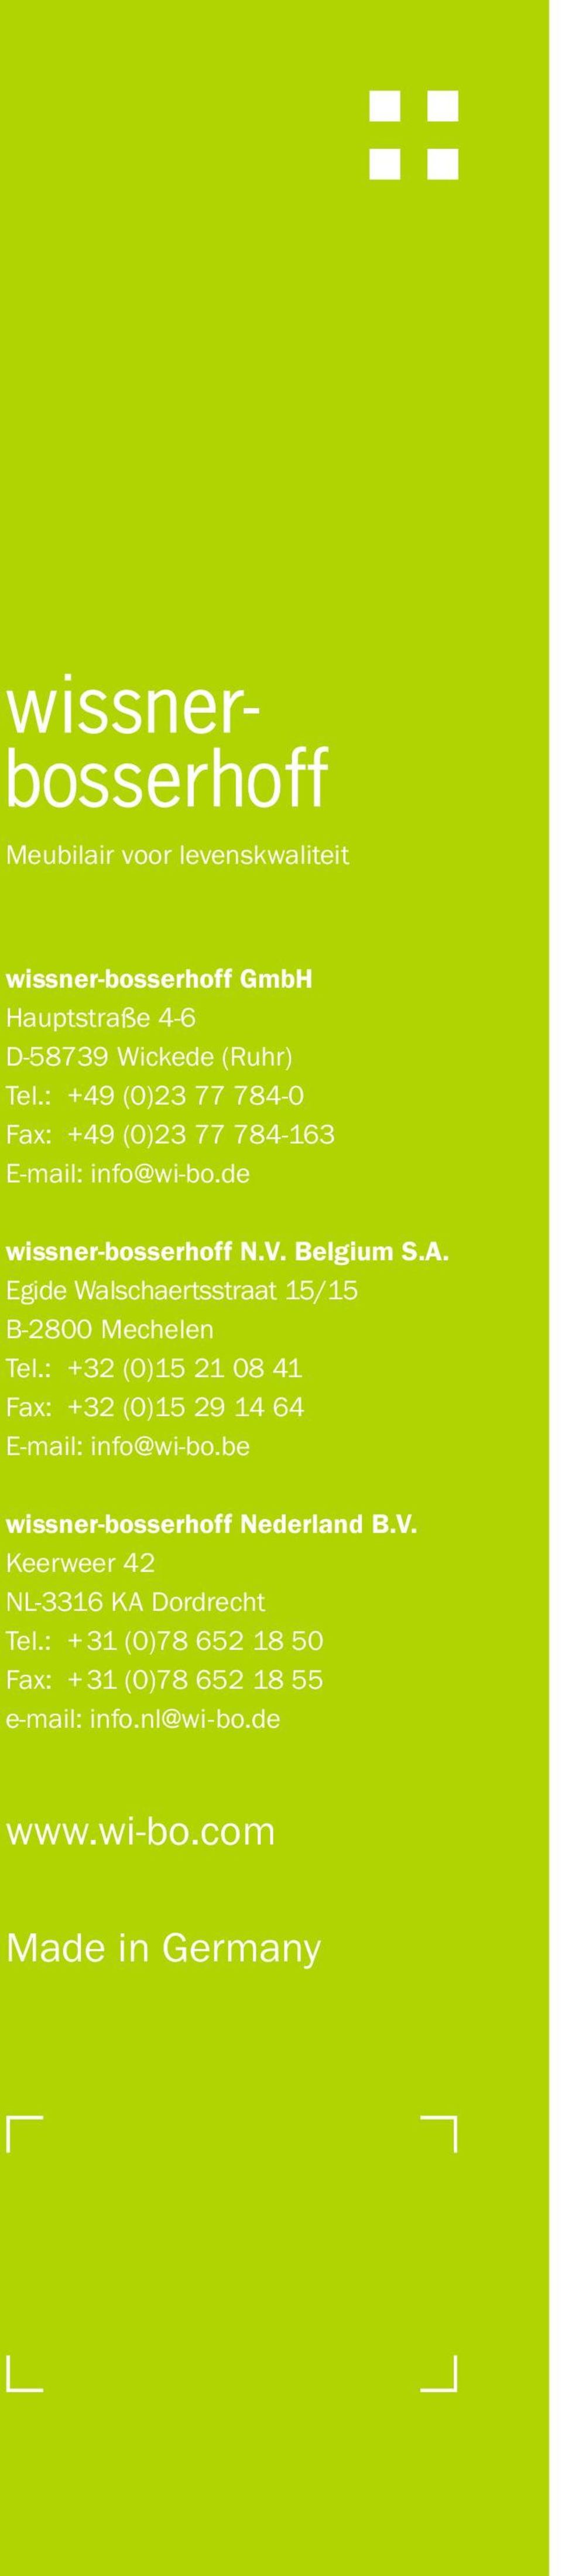 Egide Walschaertsstraat 15/15 B-2800 Mechelen Tel.: +32 (0)15 21 08 41 Fax: +32 (0)15 29 14 64 E-mail: info@wi-bo.